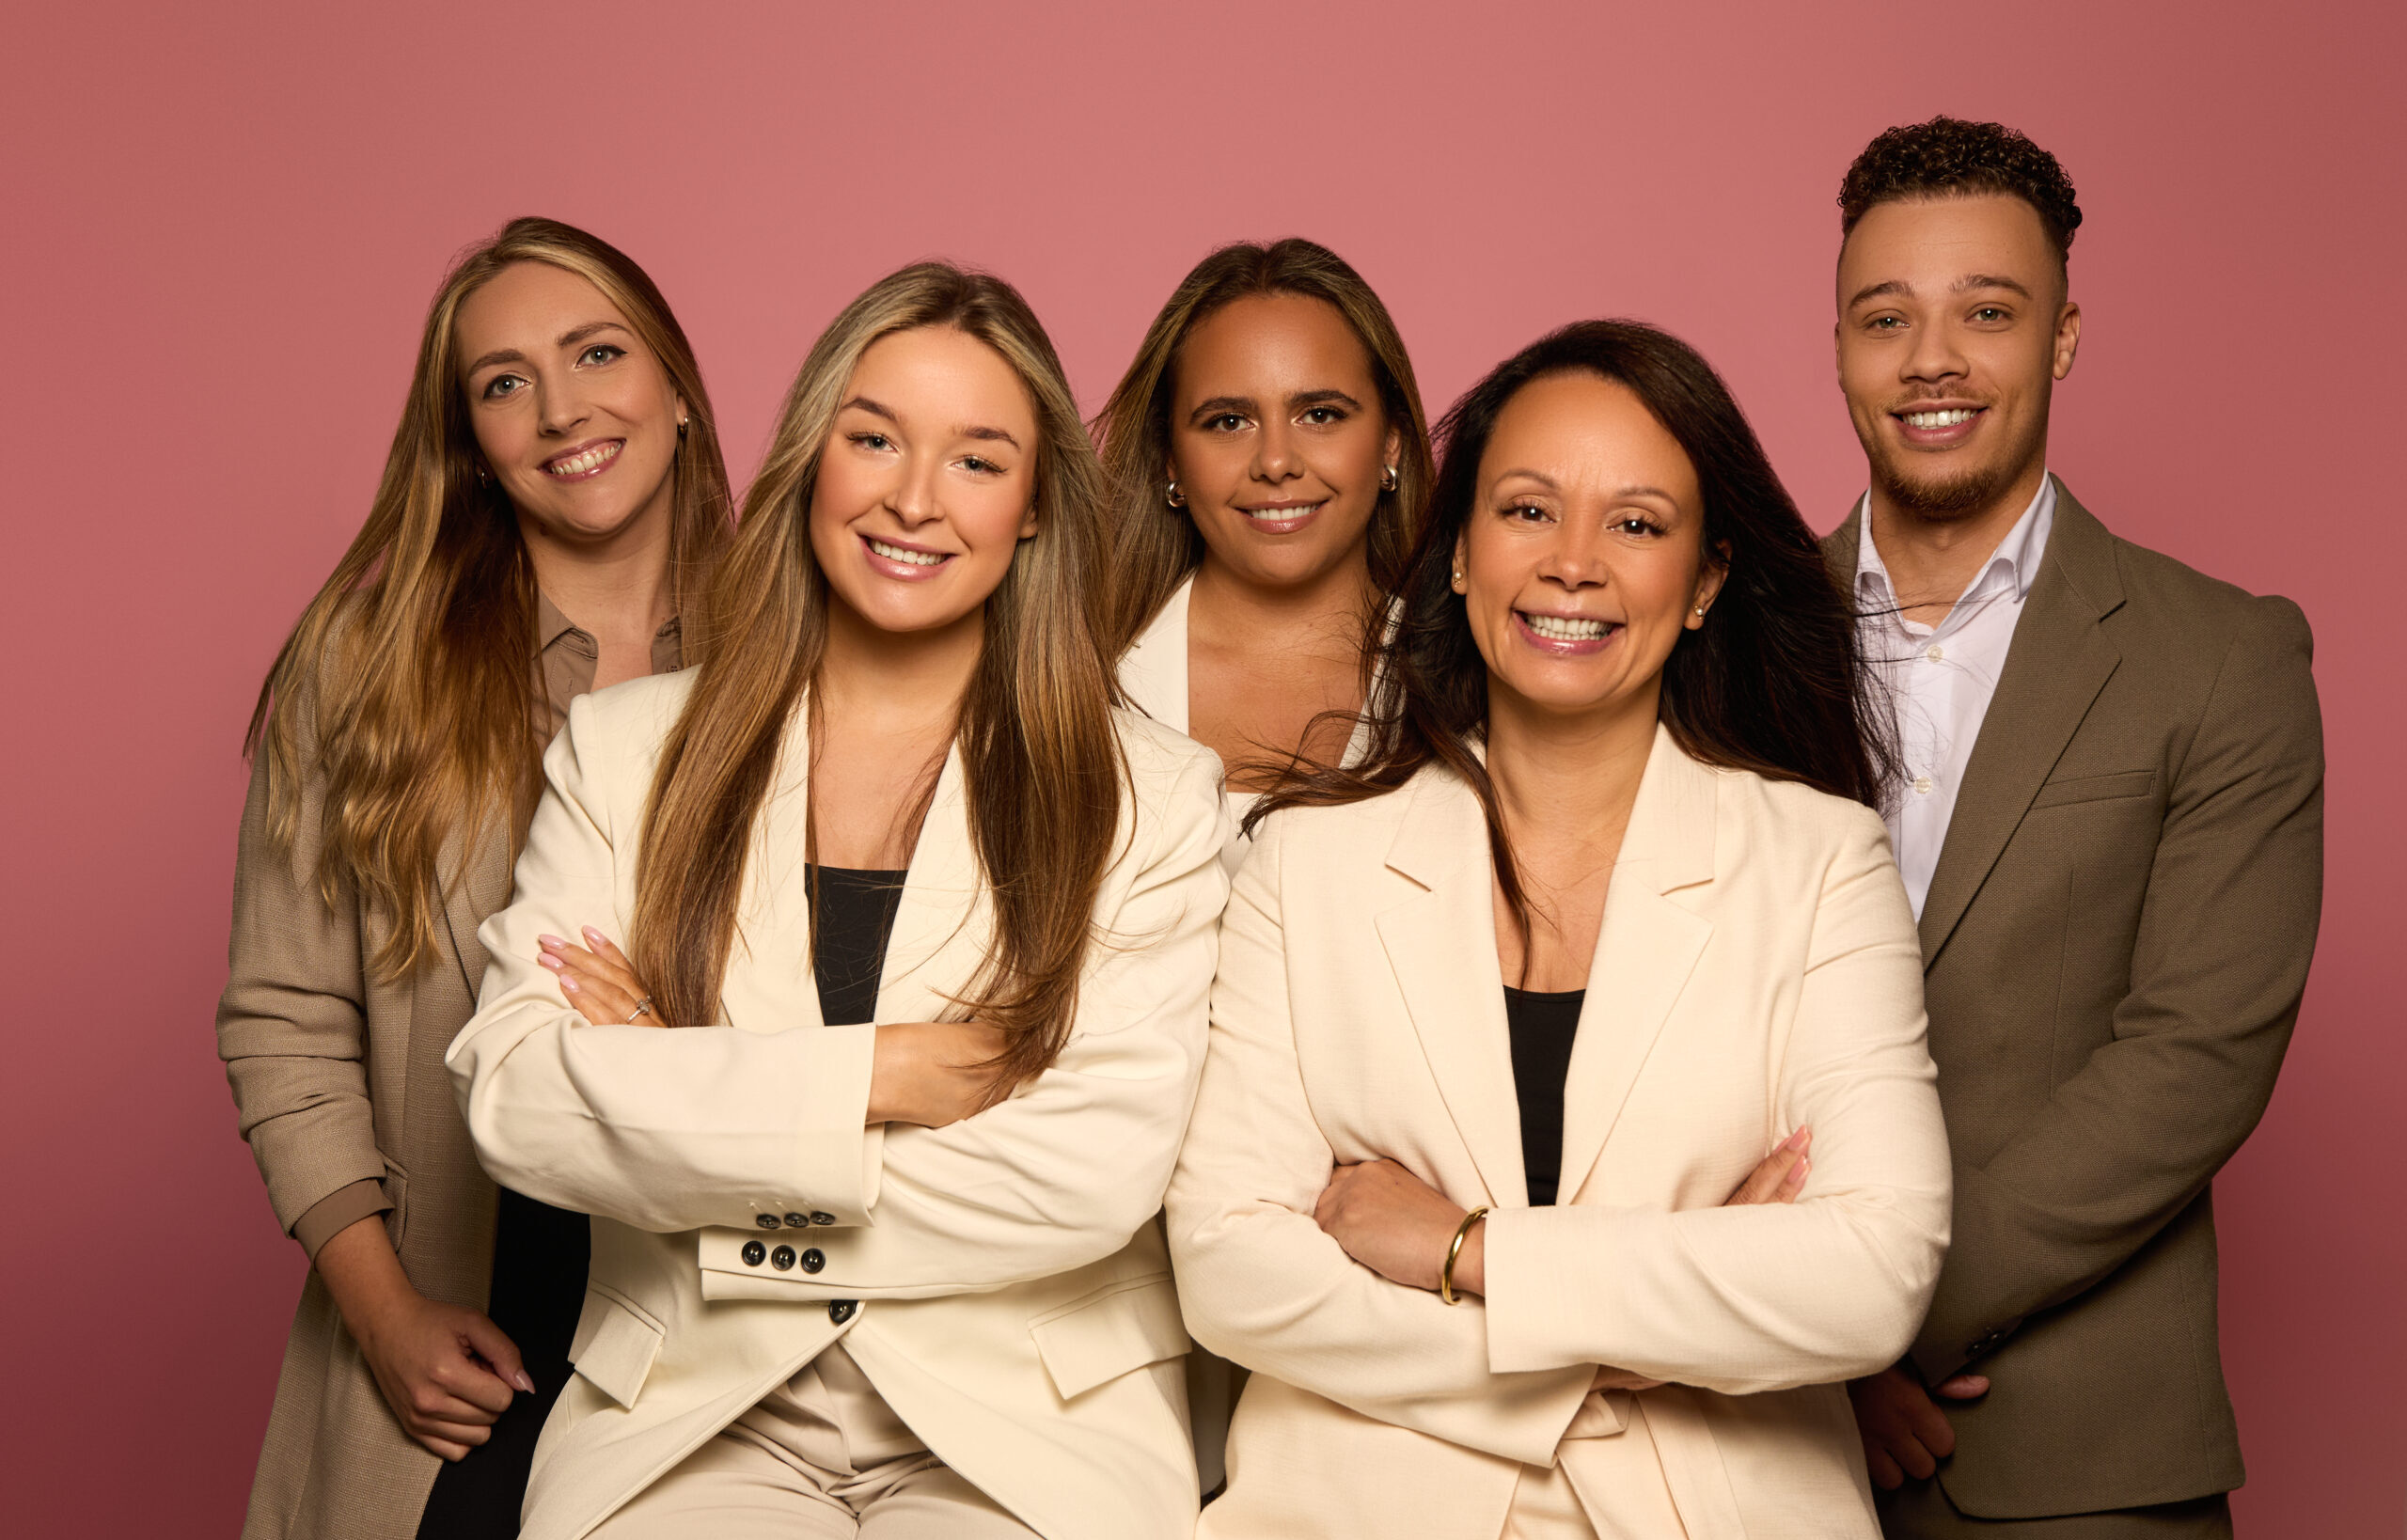 jijEnZij Teamfoto met roze achtergrond, vlnr: lianne, sharony, yordan, thalita, noel